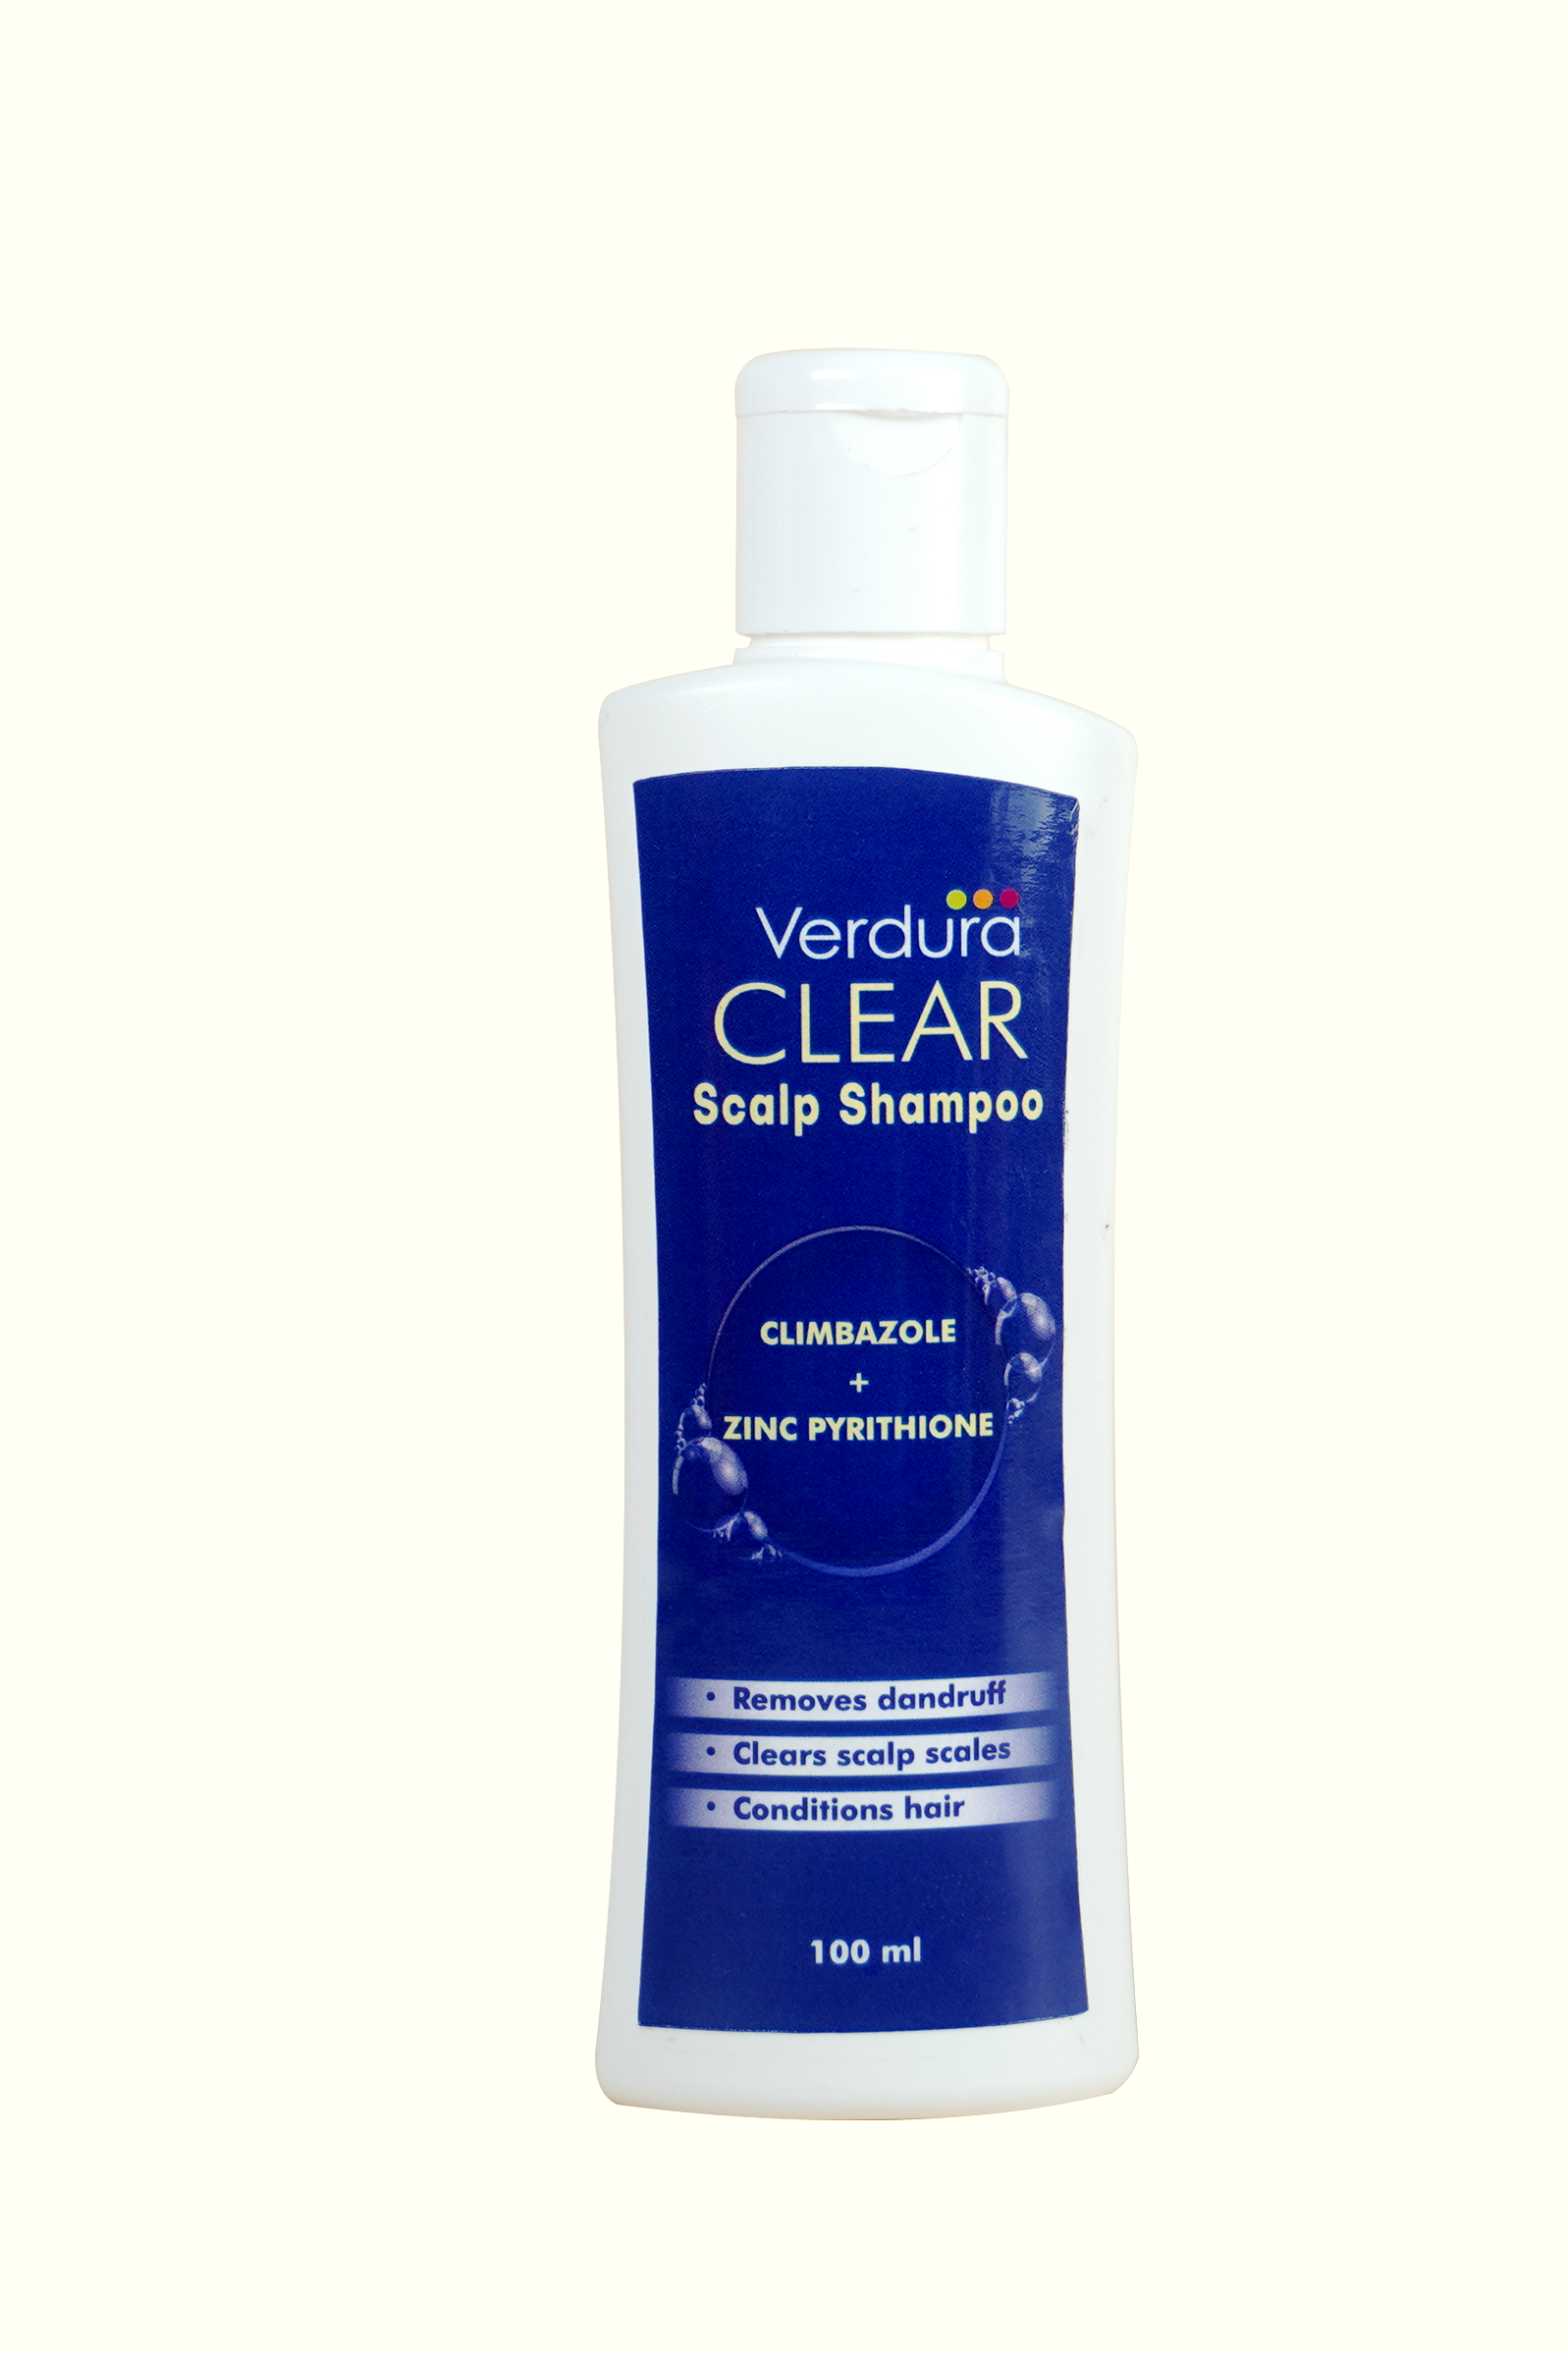 Verdura clear scalp shampoo